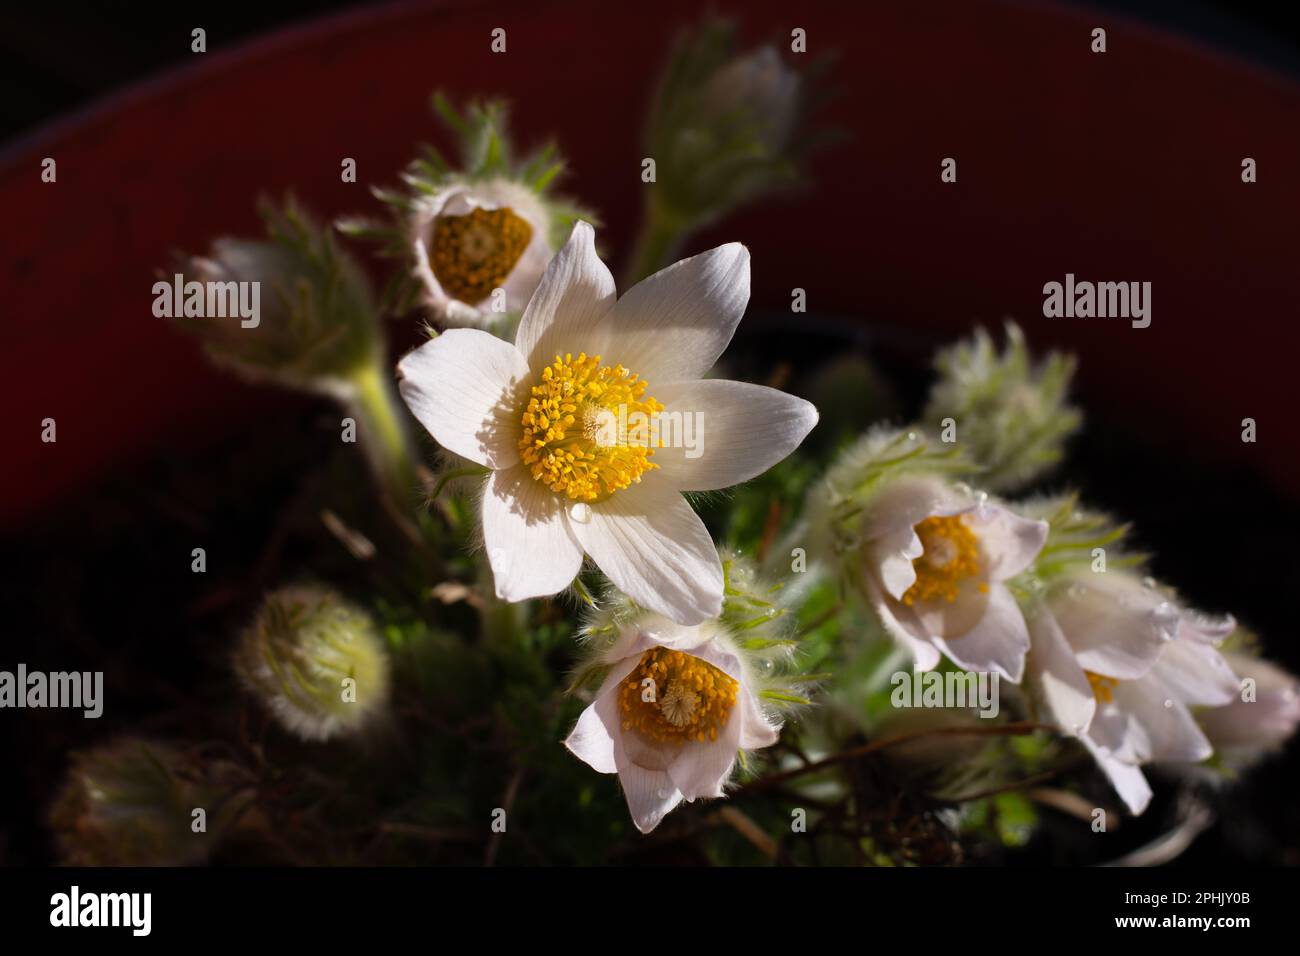 pulsatilla alba in bloom poisonous garden plant Stock Photo